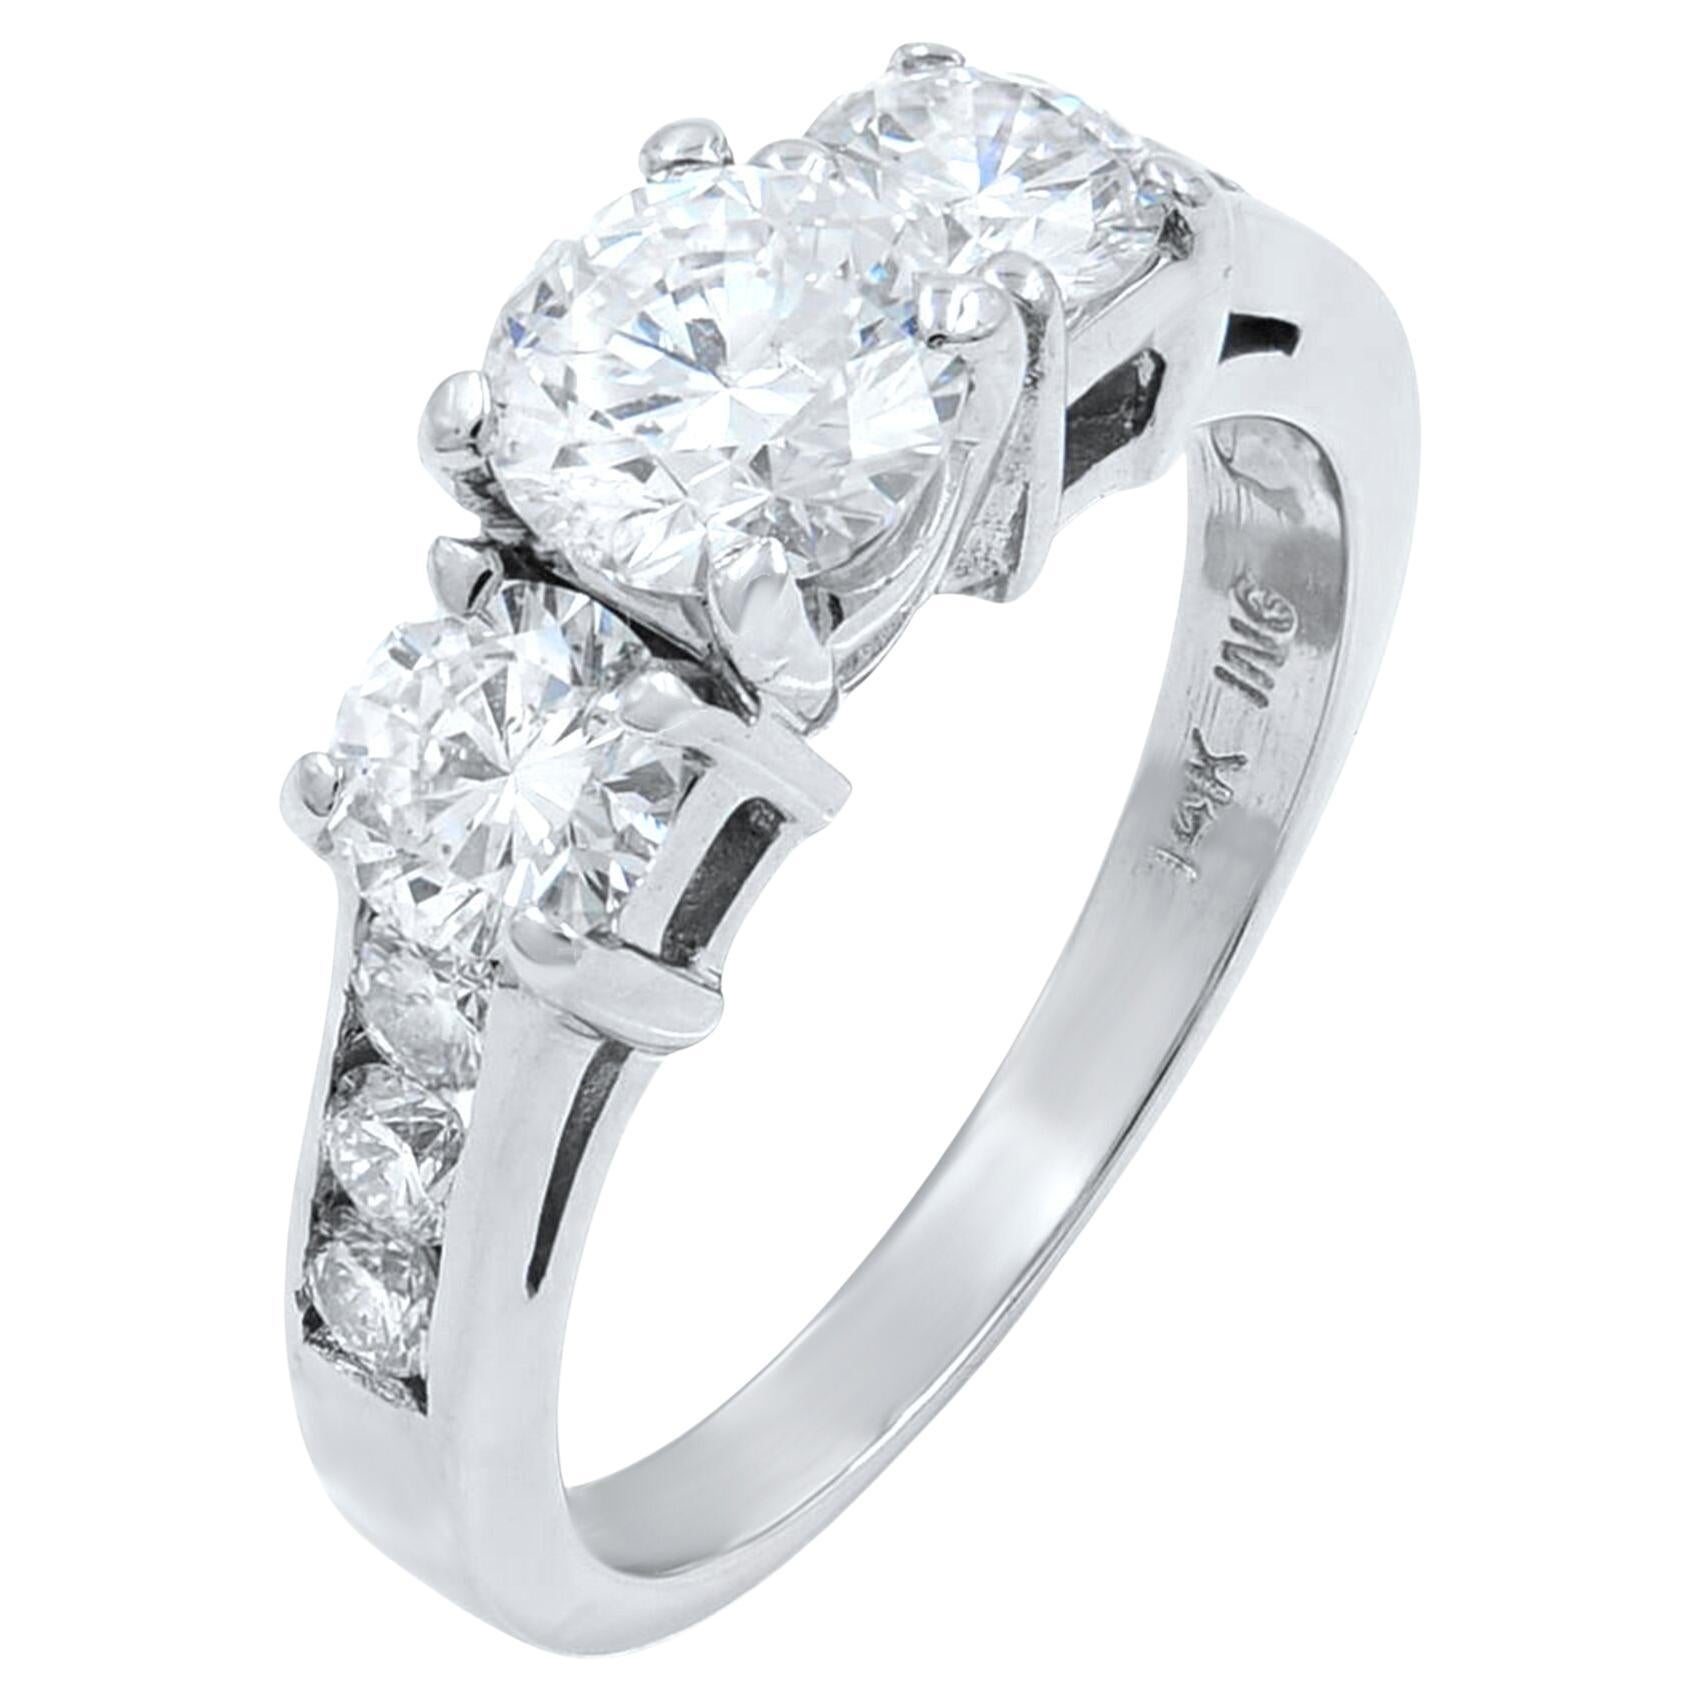 Rachel Koen Three Stone Round Diamond Ladies Ring 14k White Gold 1.48Cttw For Sale